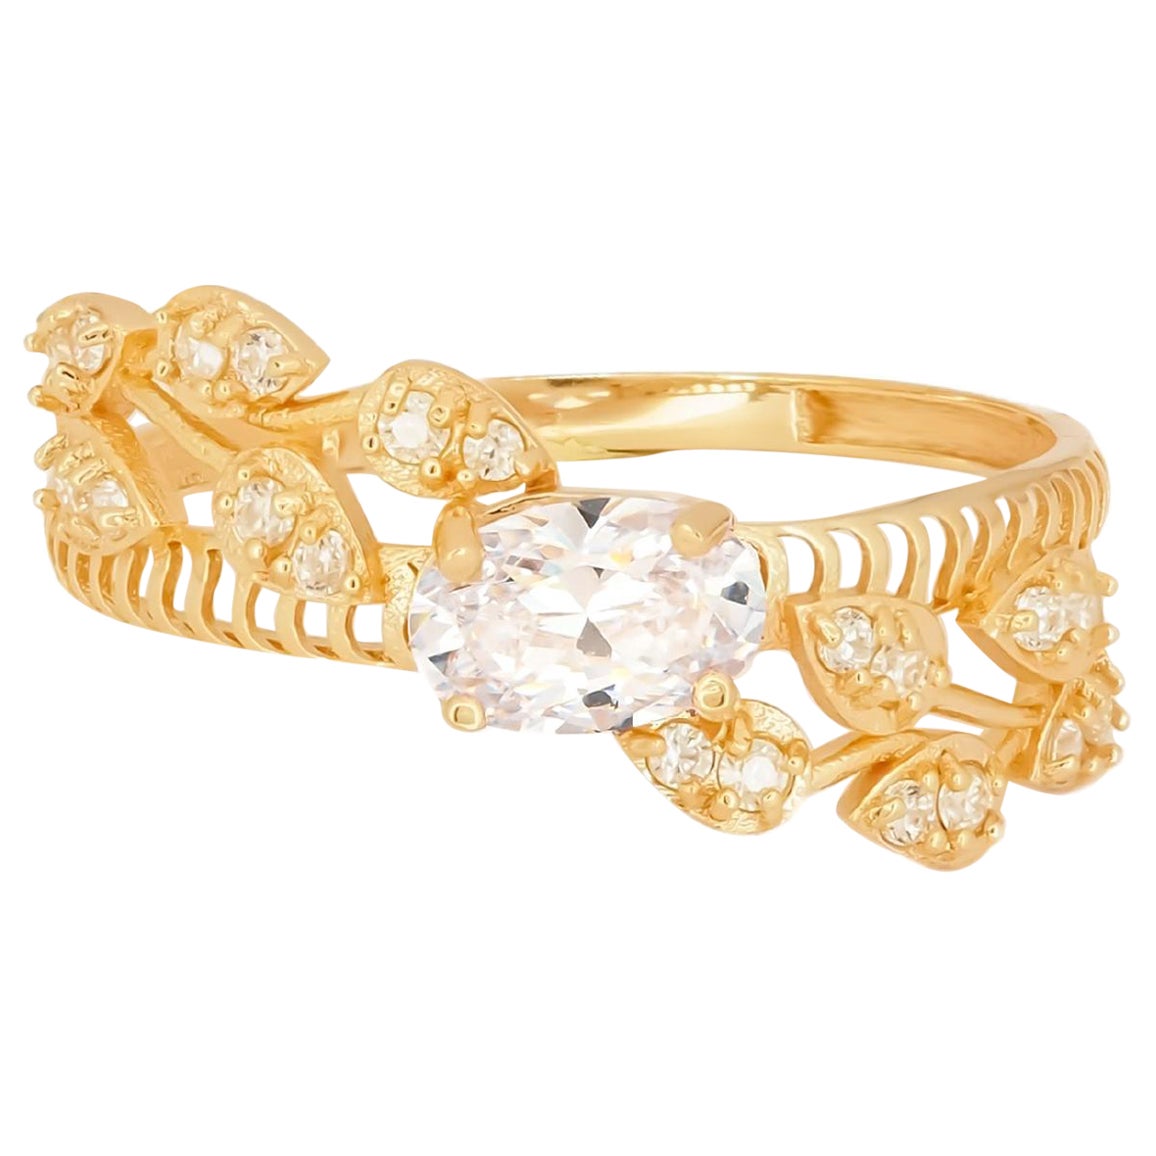 Oval moissanite 14k gold engagement ring. For Sale